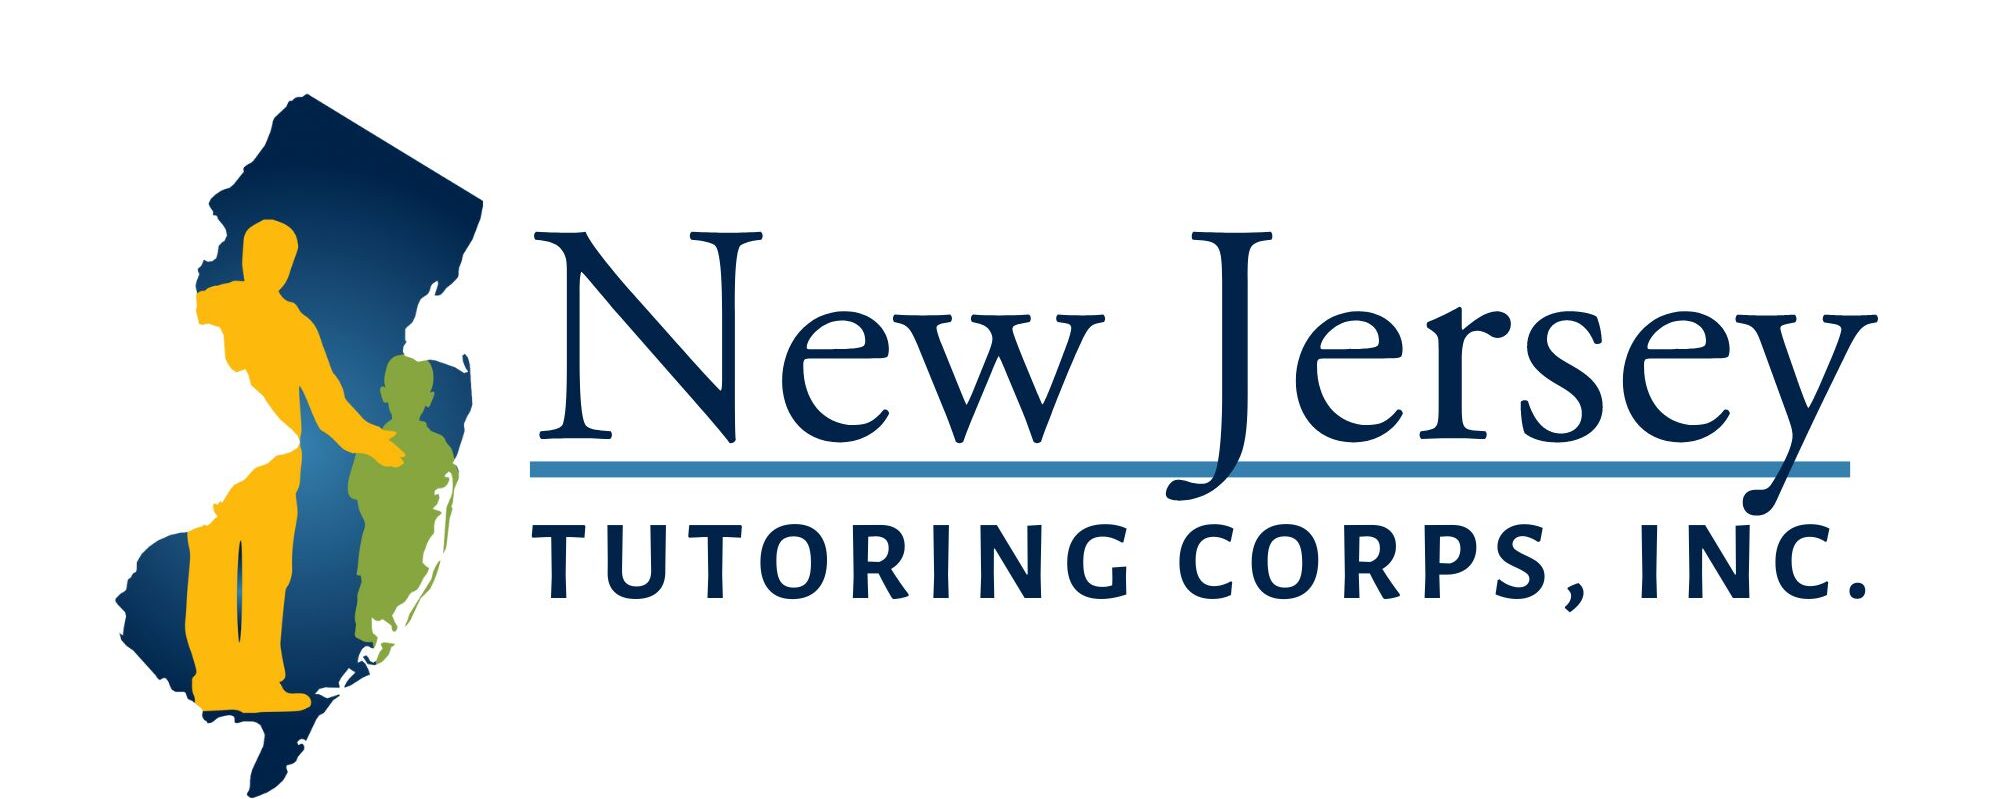 NJTC Logo